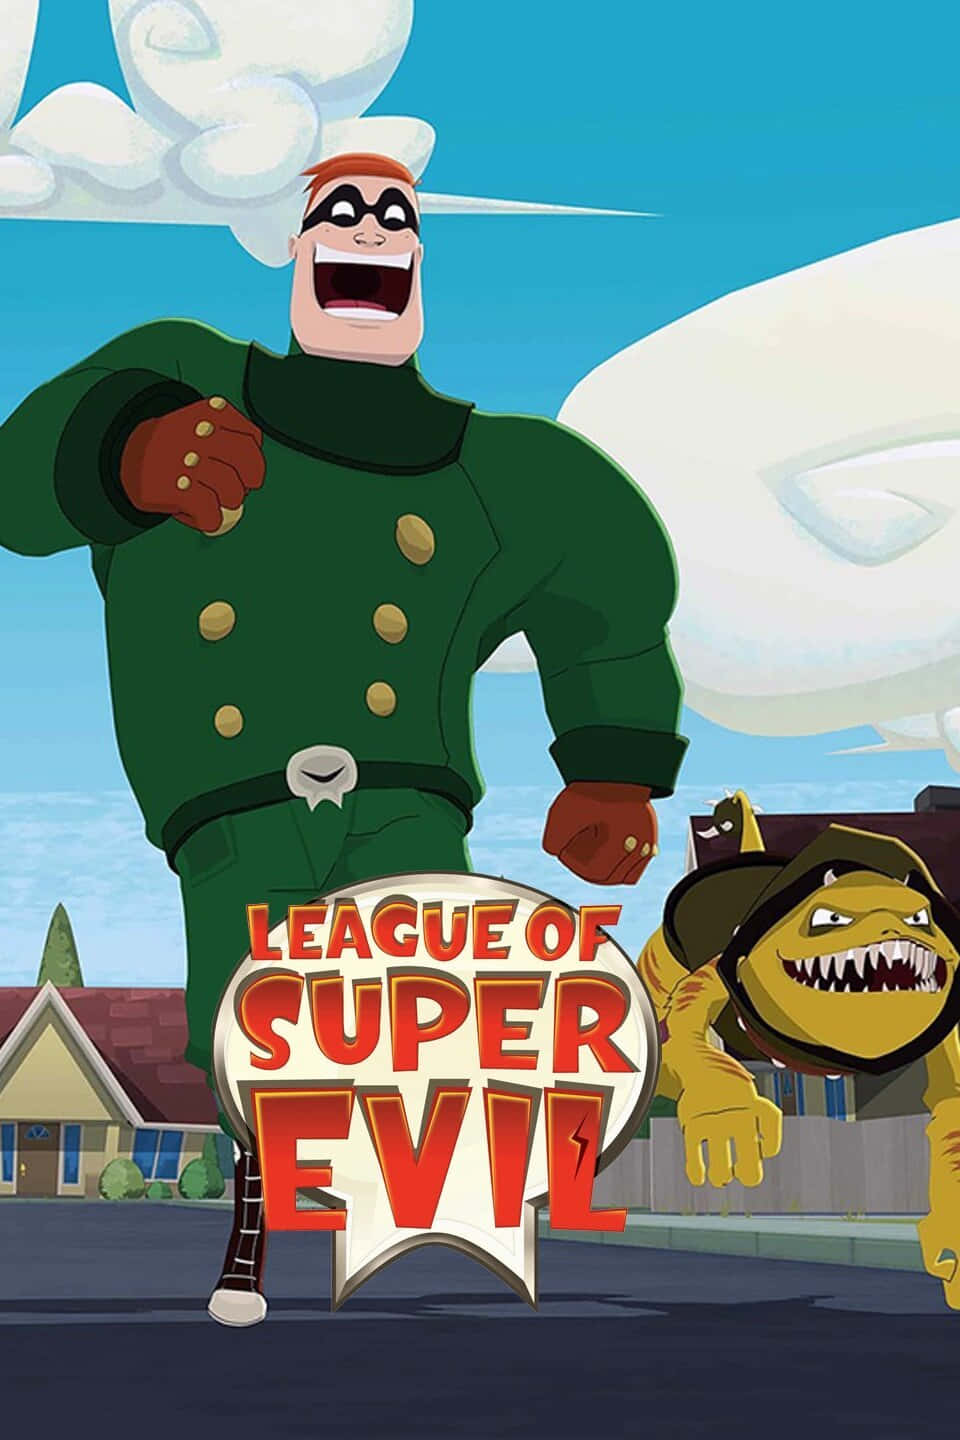 Leagueof Super Evil Animated Poster Wallpaper